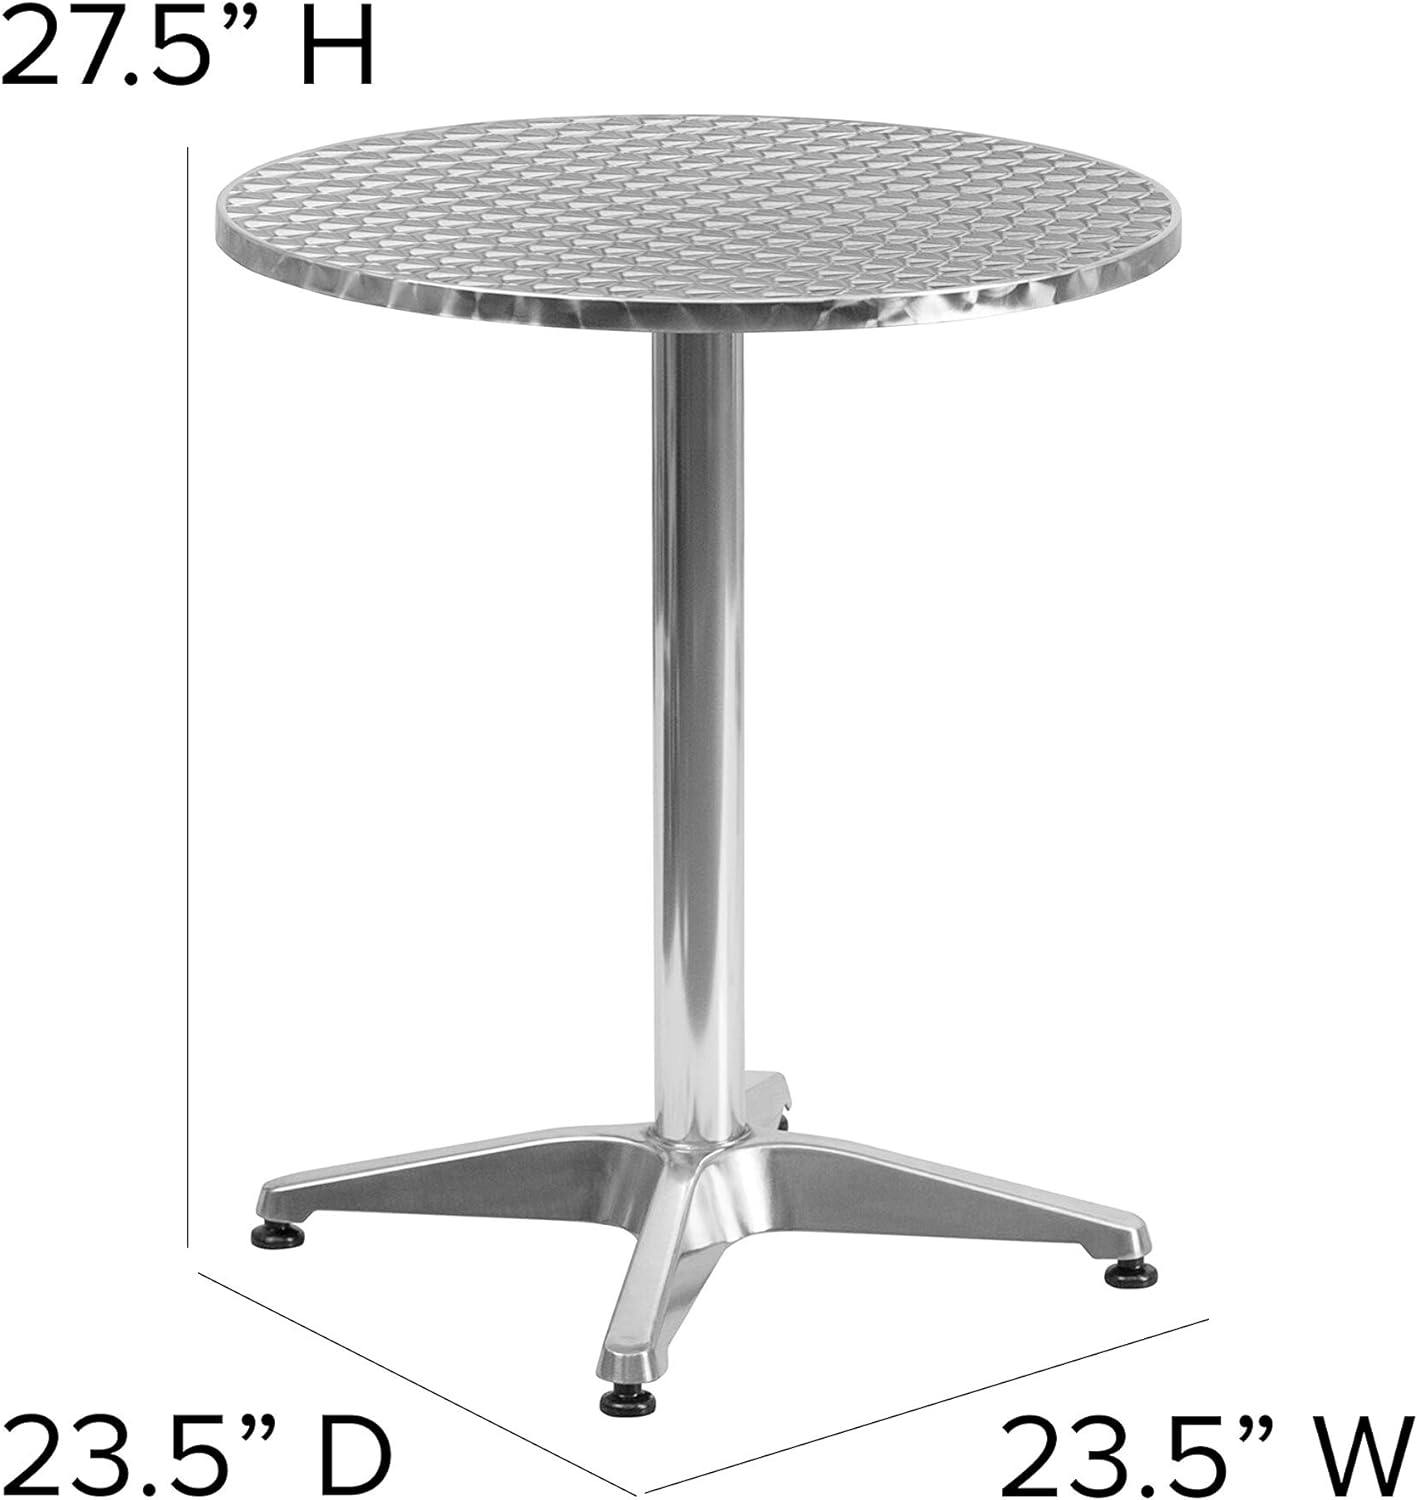 Sleek 23.5'' Round Stainless Steel Top Indoor-Outdoor Dining Table